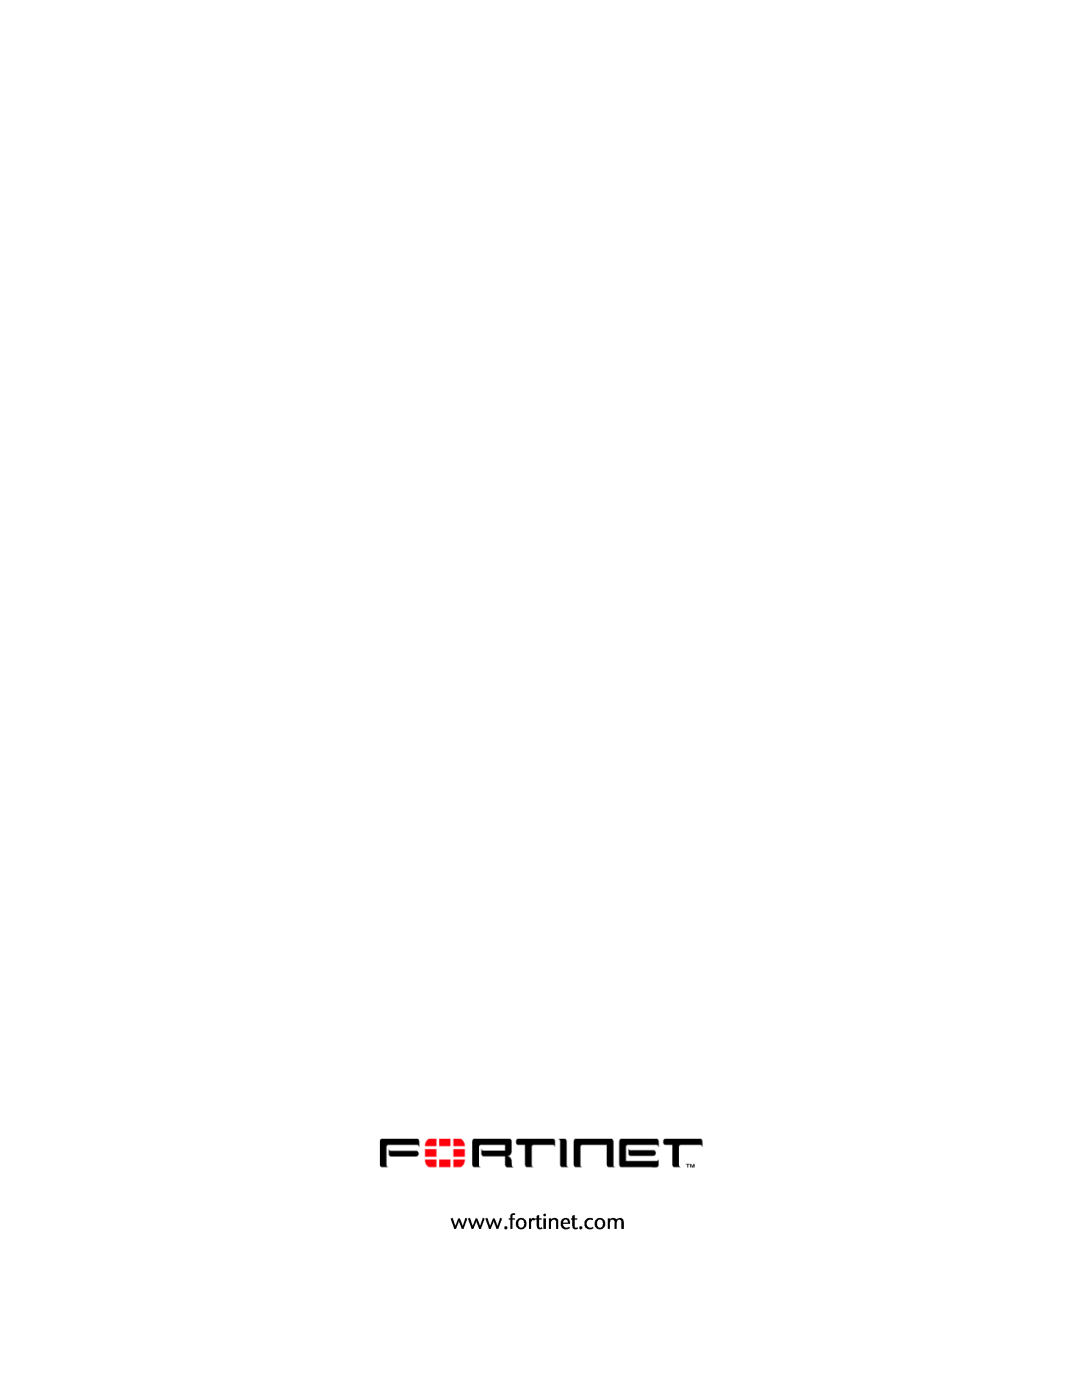 Fortinet Version 4.1 manual 